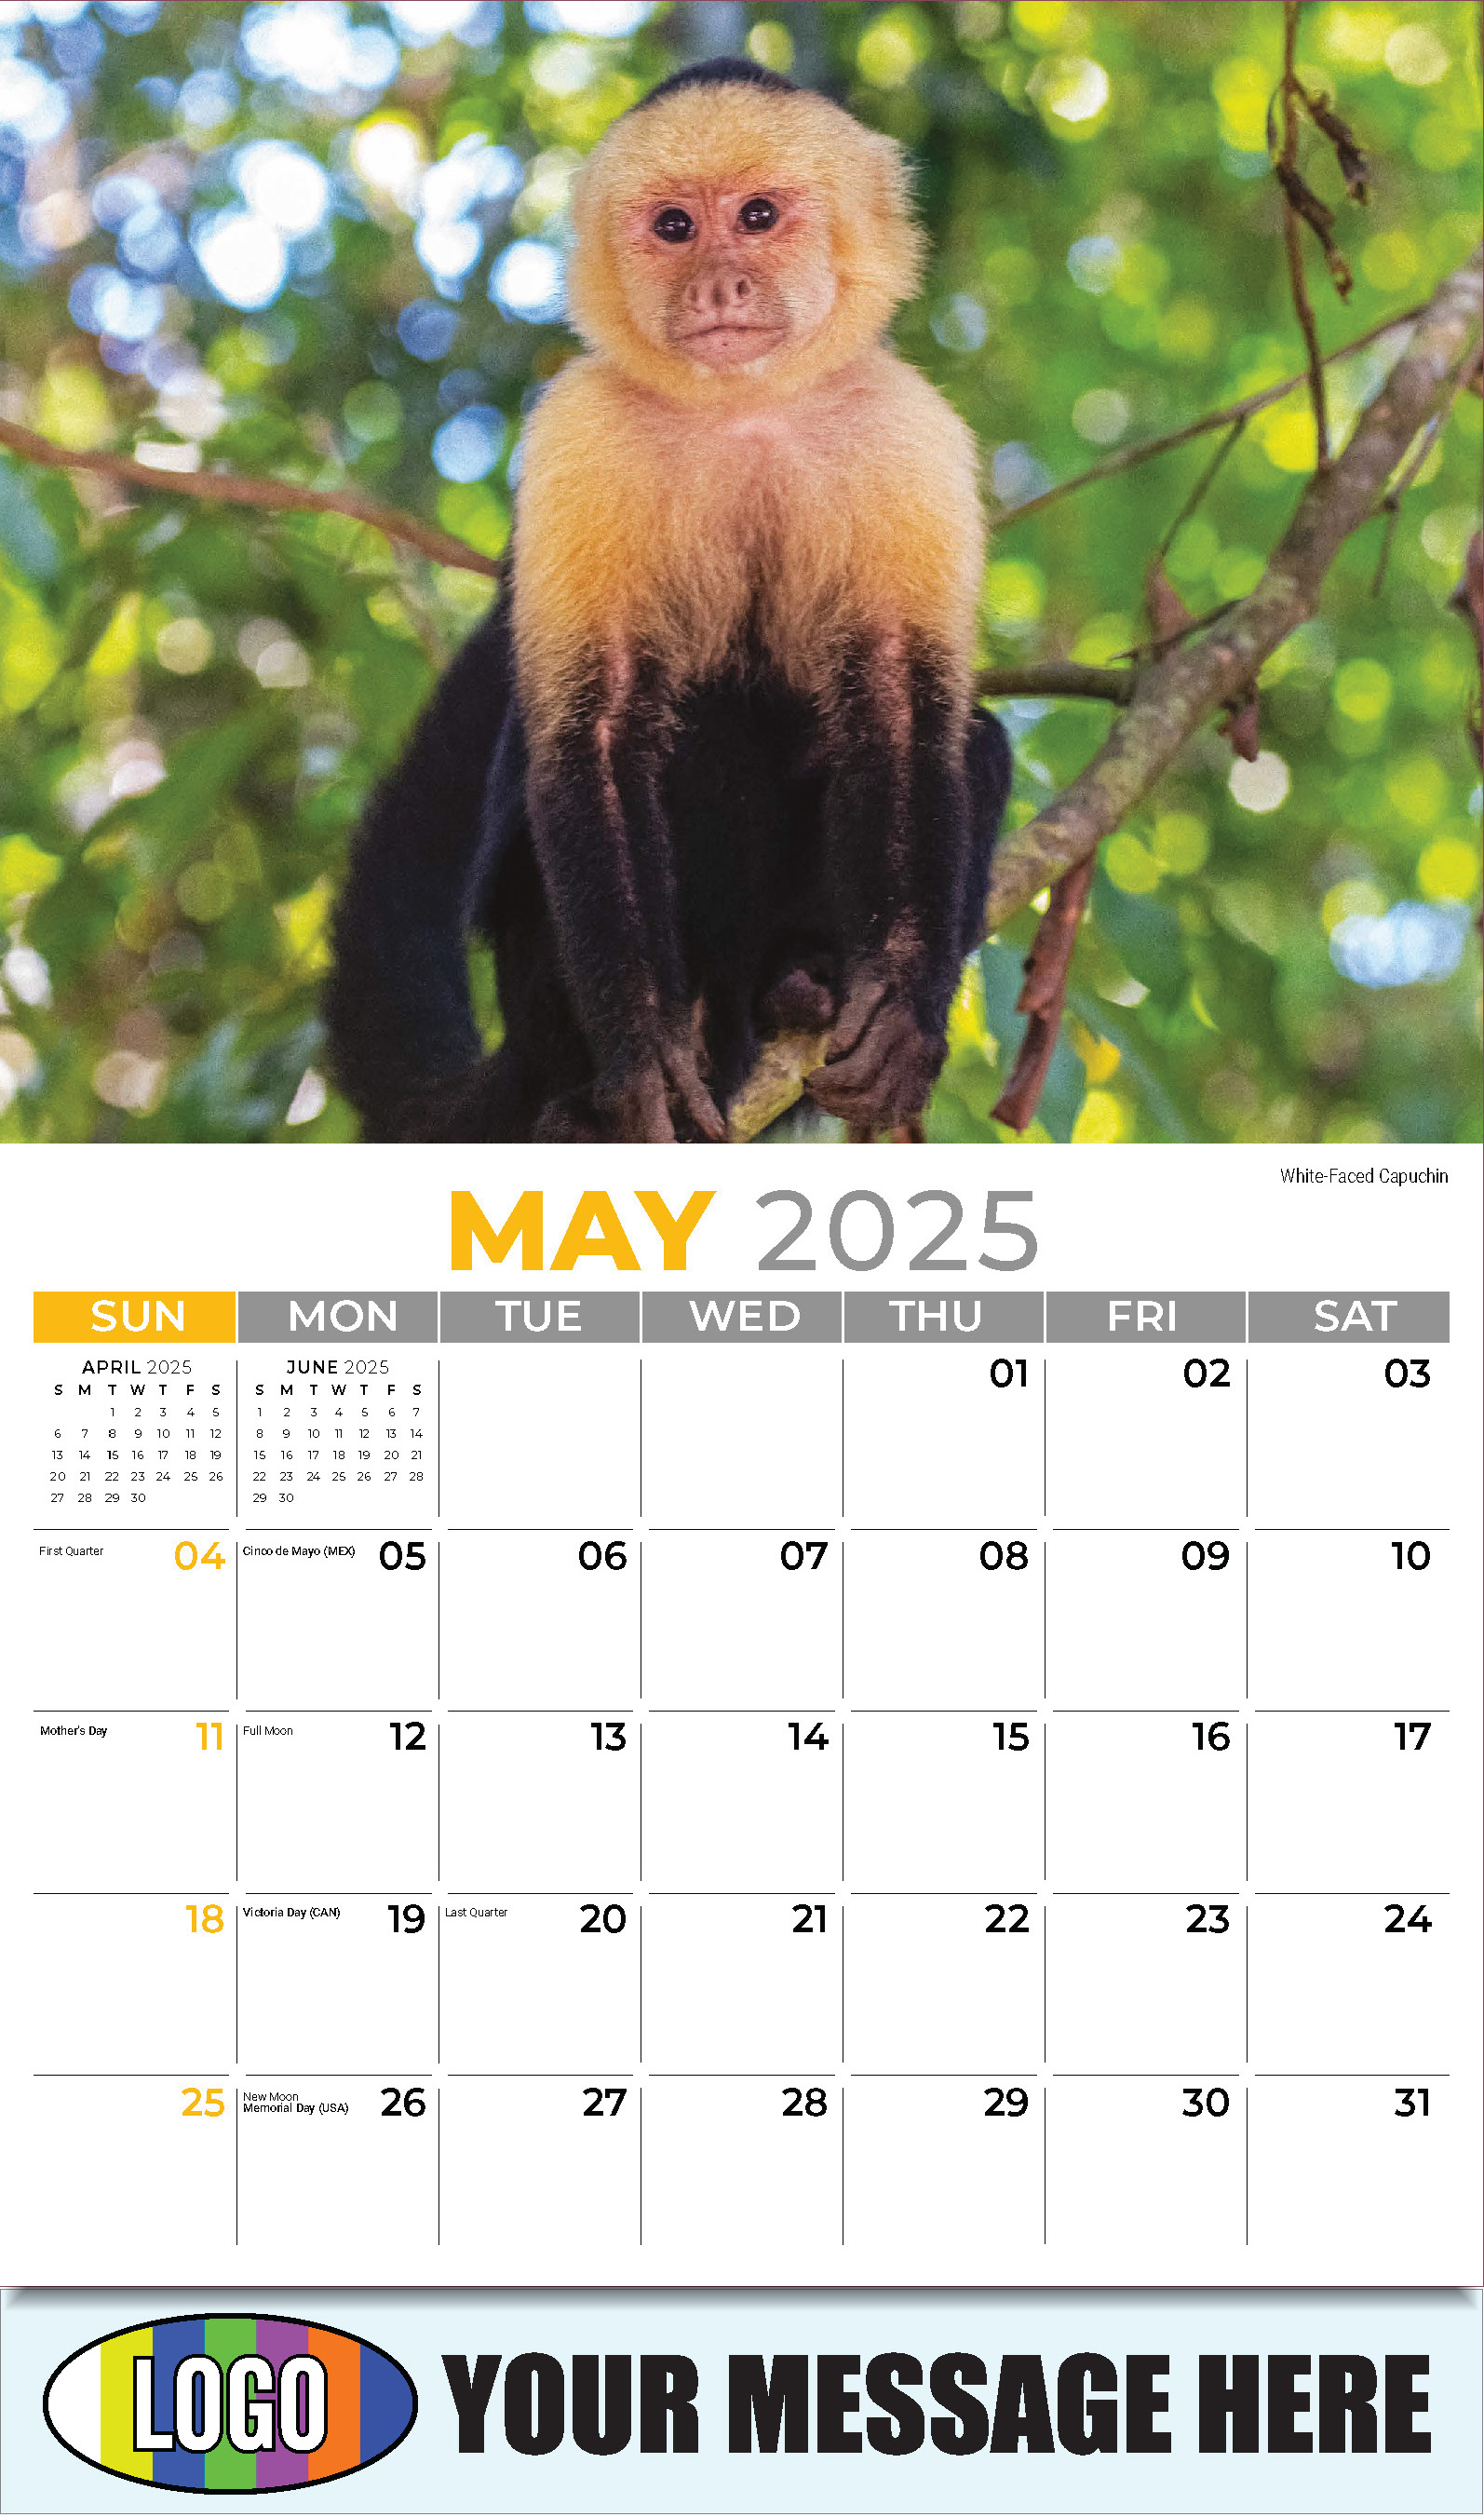 International Wildlife 2025 Business Advertising Wall Calendar - May